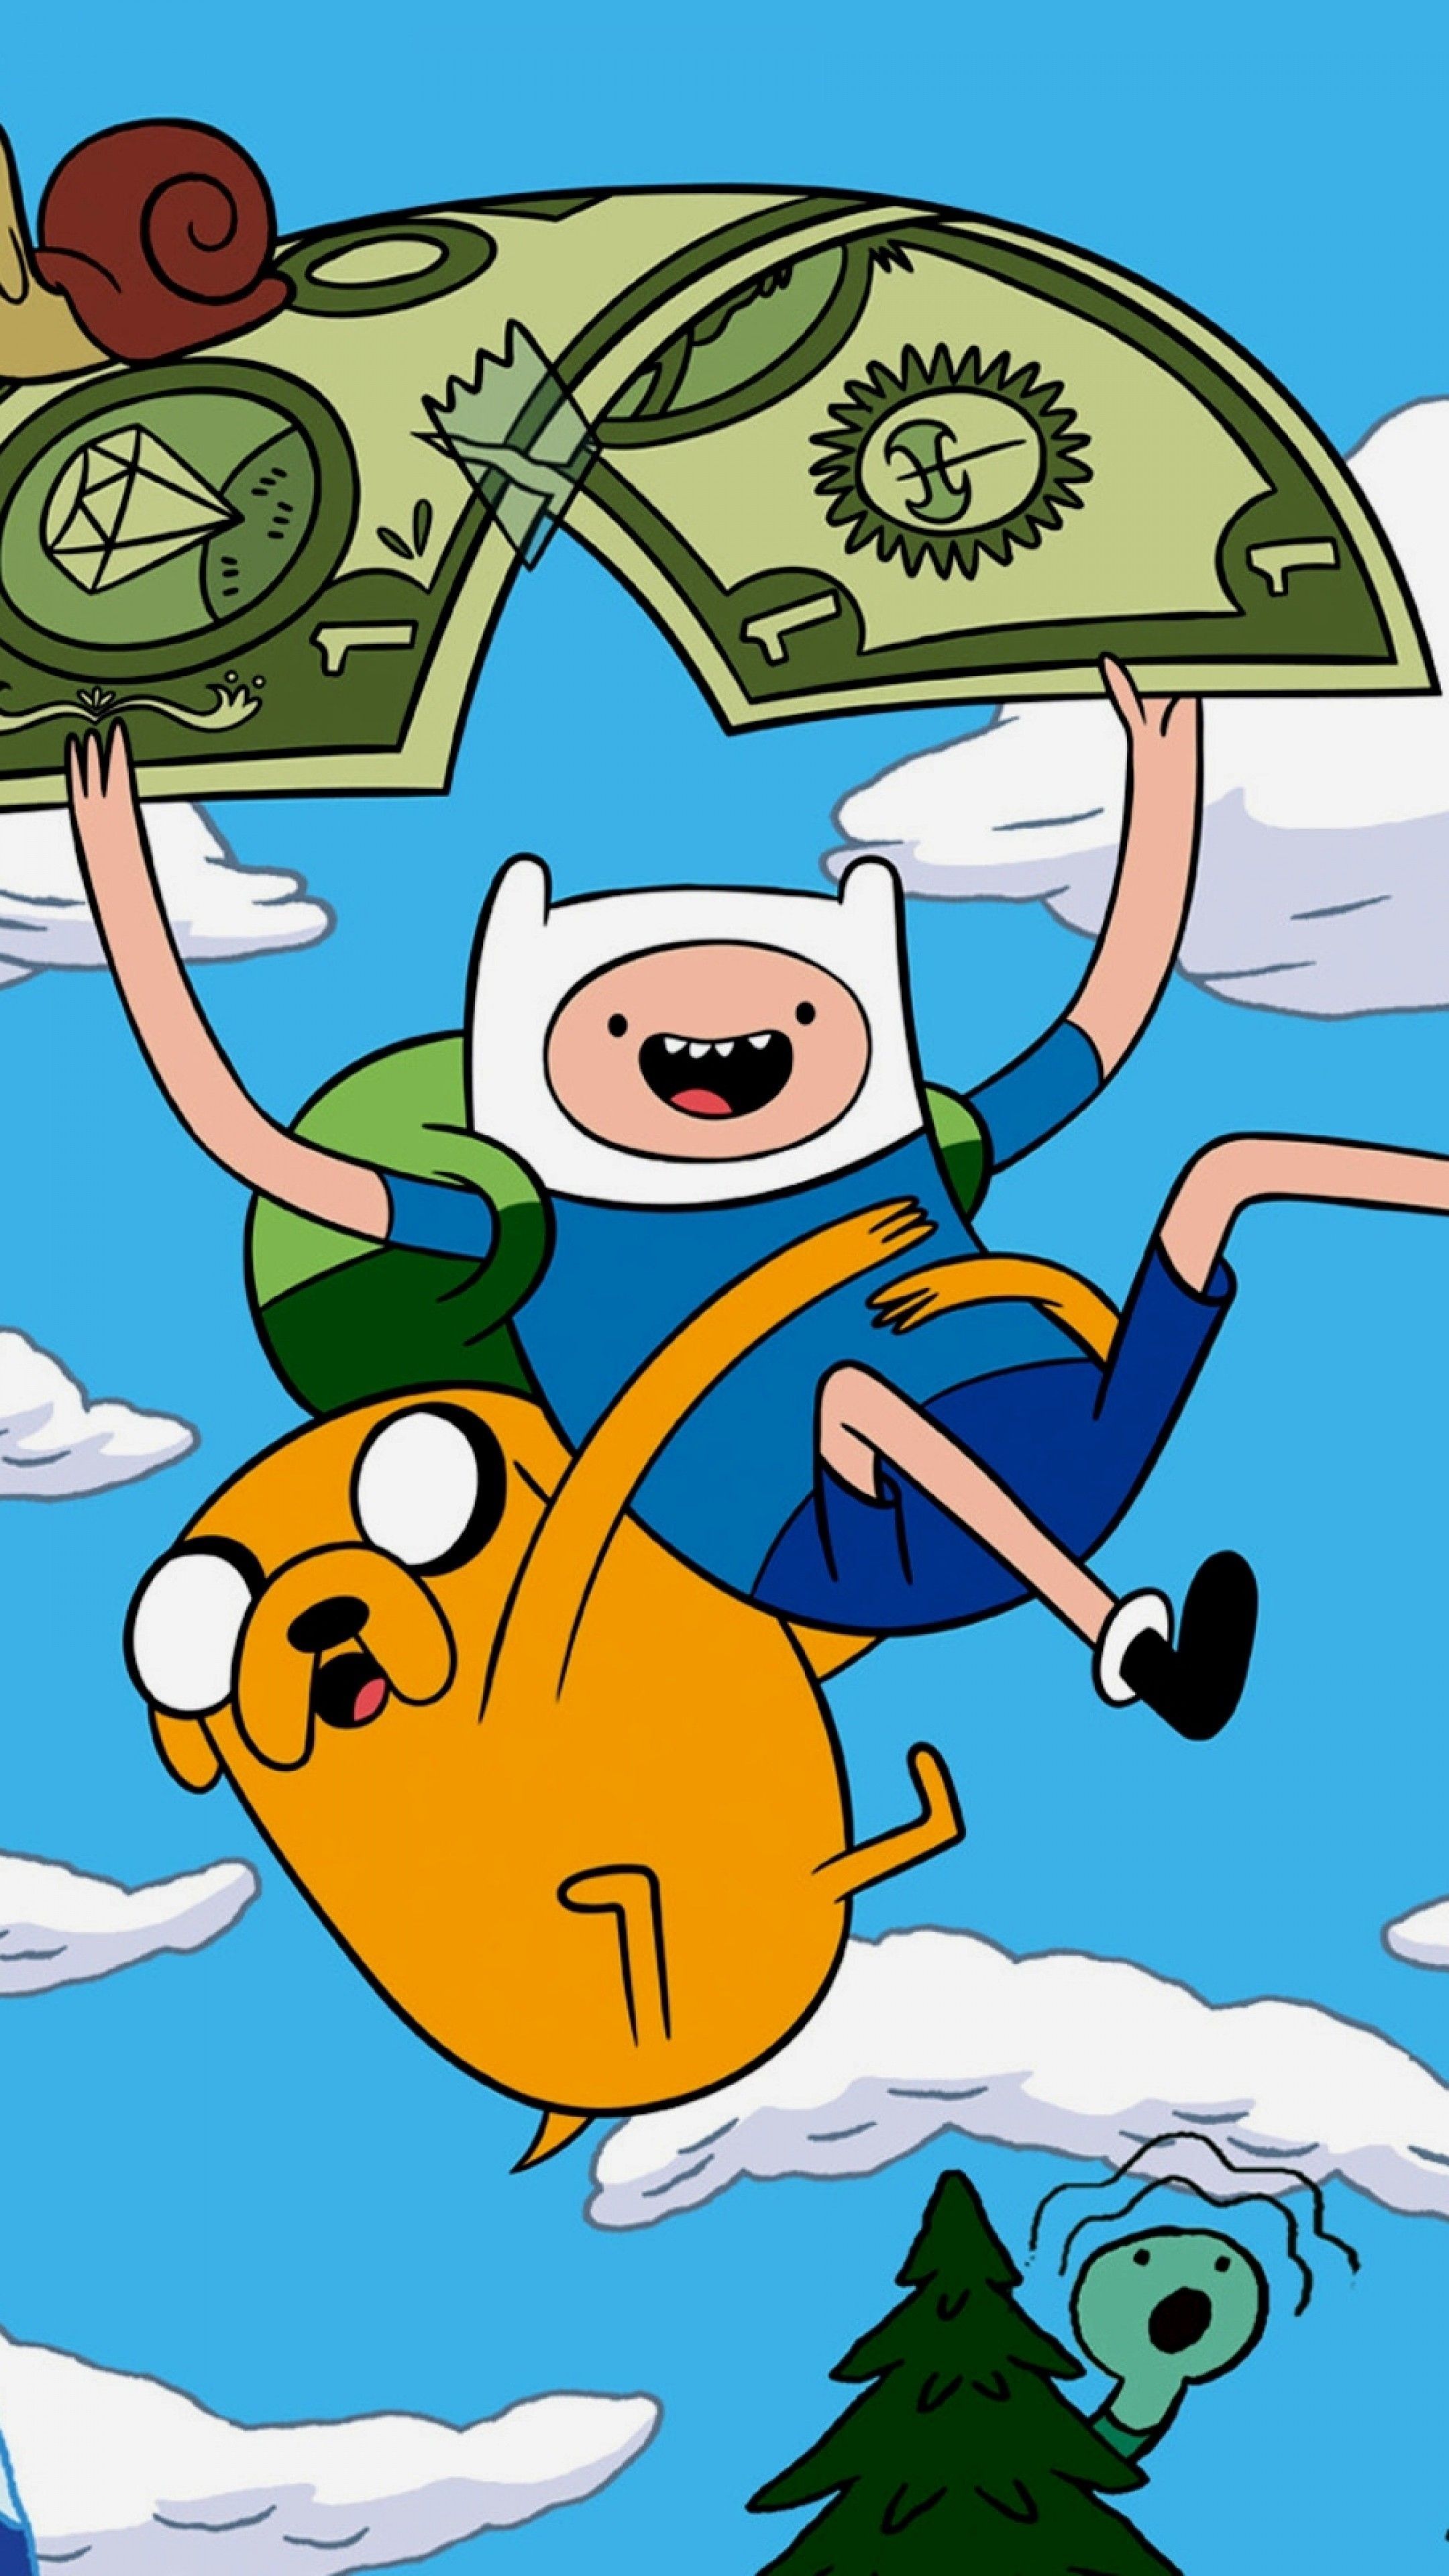 Adventure Time (TV Series) Wallpaper (image inside)